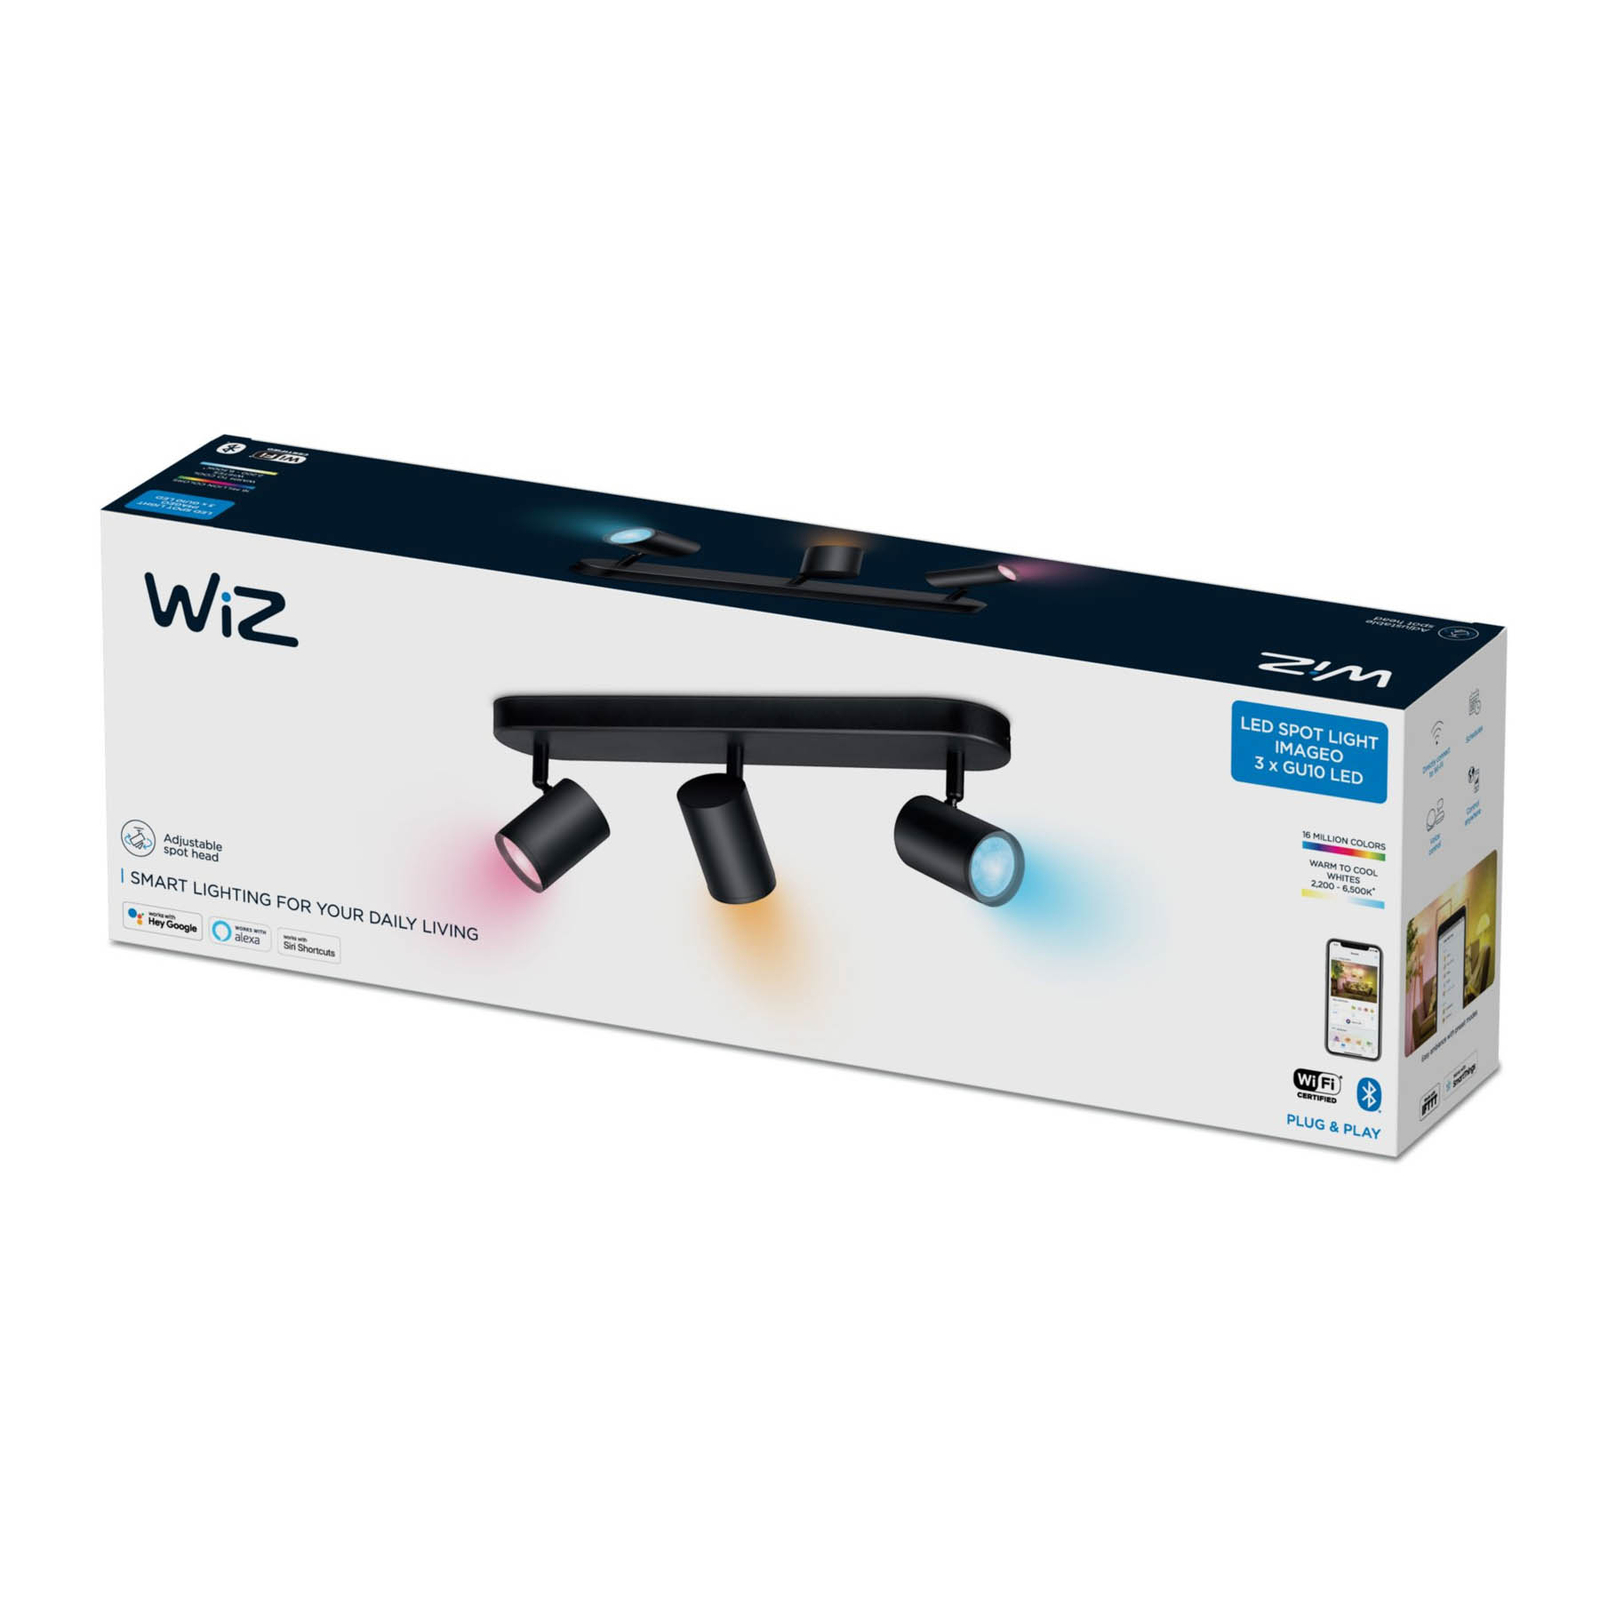 WiZ Imageo spot LED à 3 lampes RVB, noir